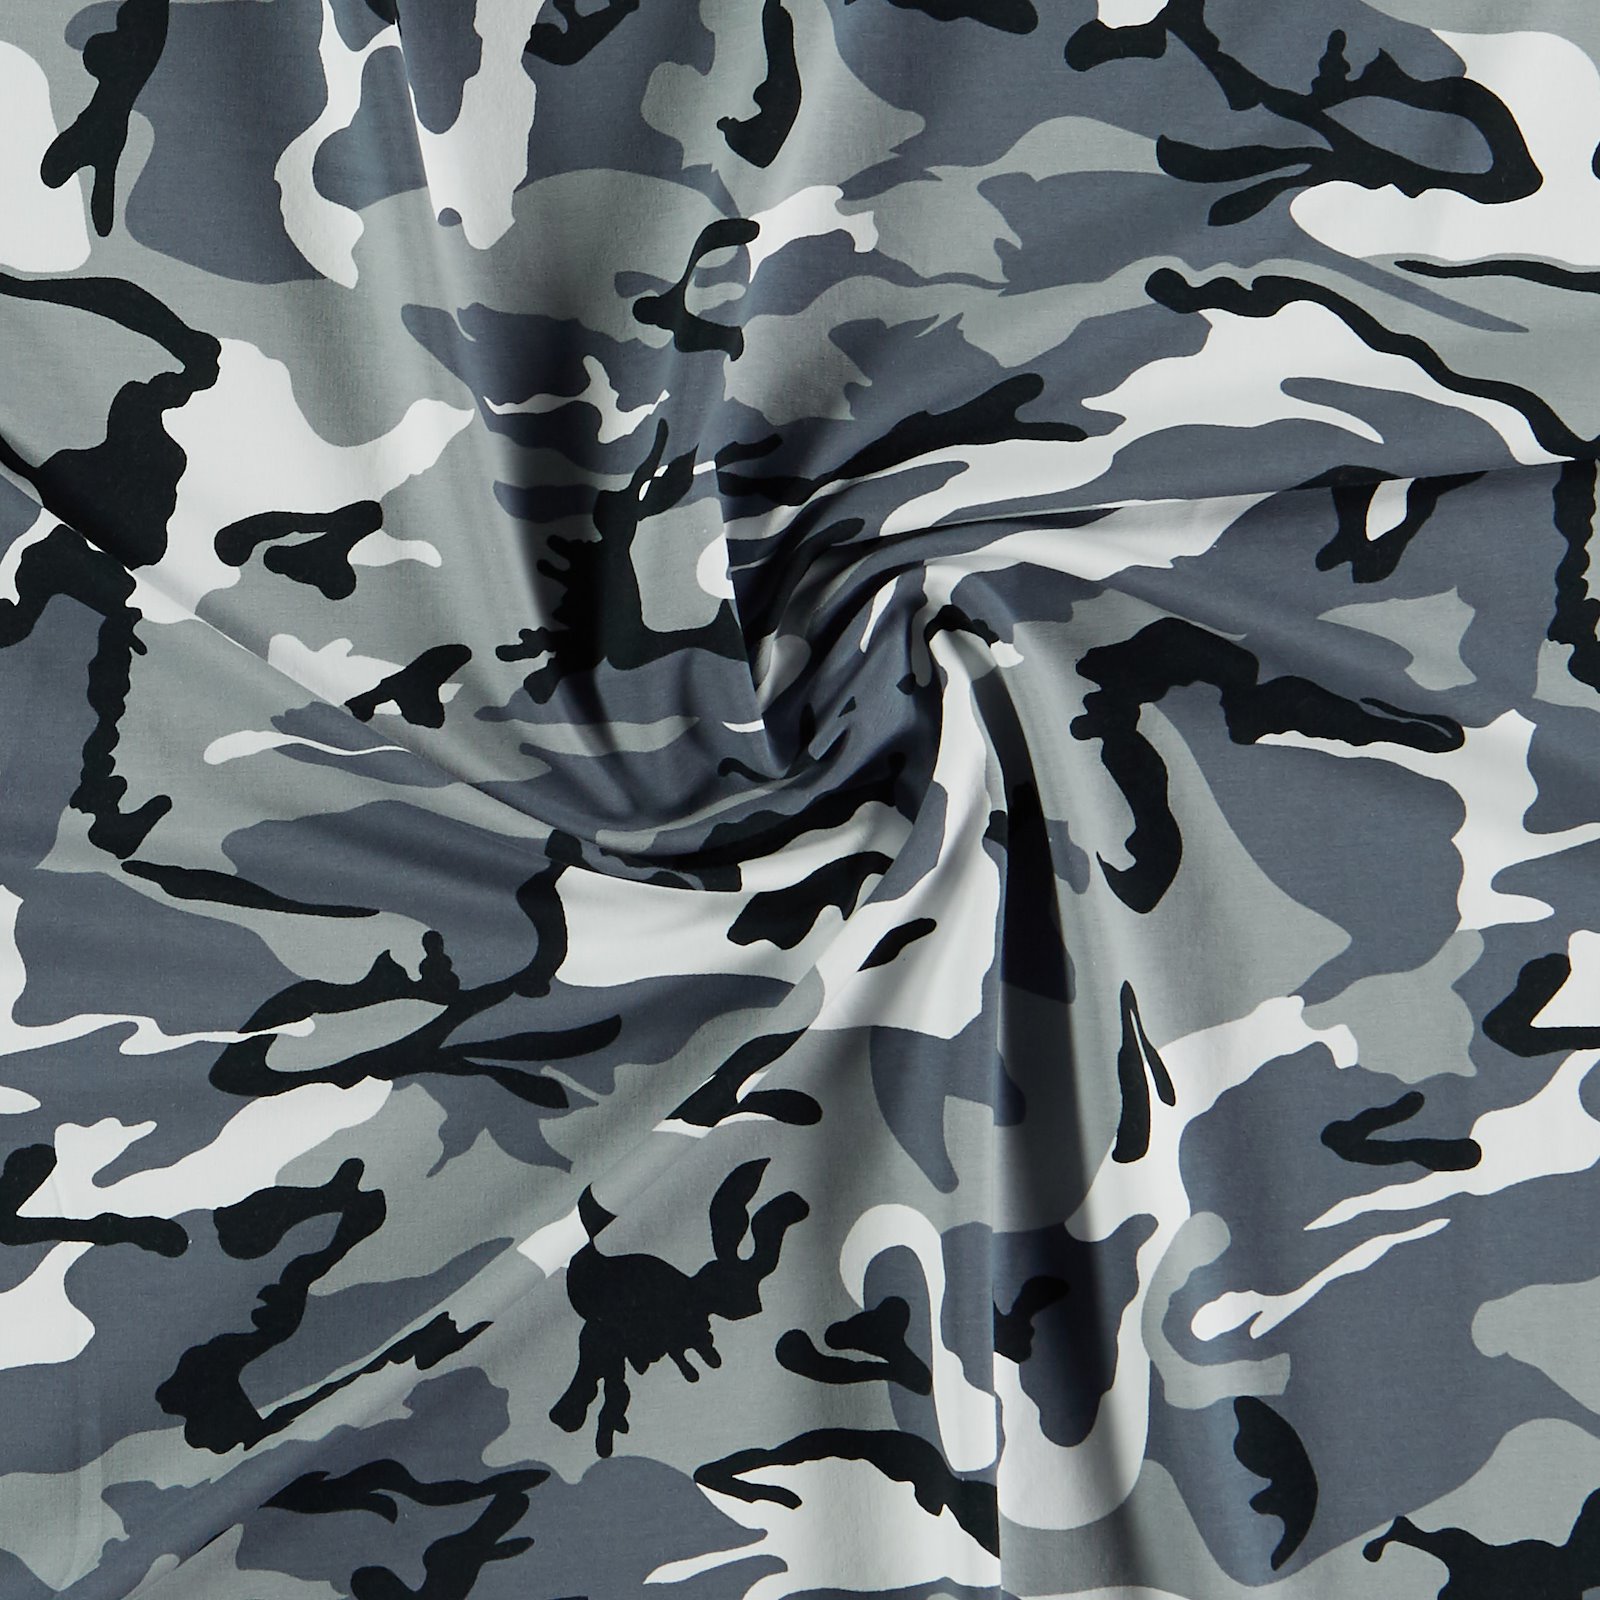 Sweat blaugrau m camouflage print ang. 211930_pack